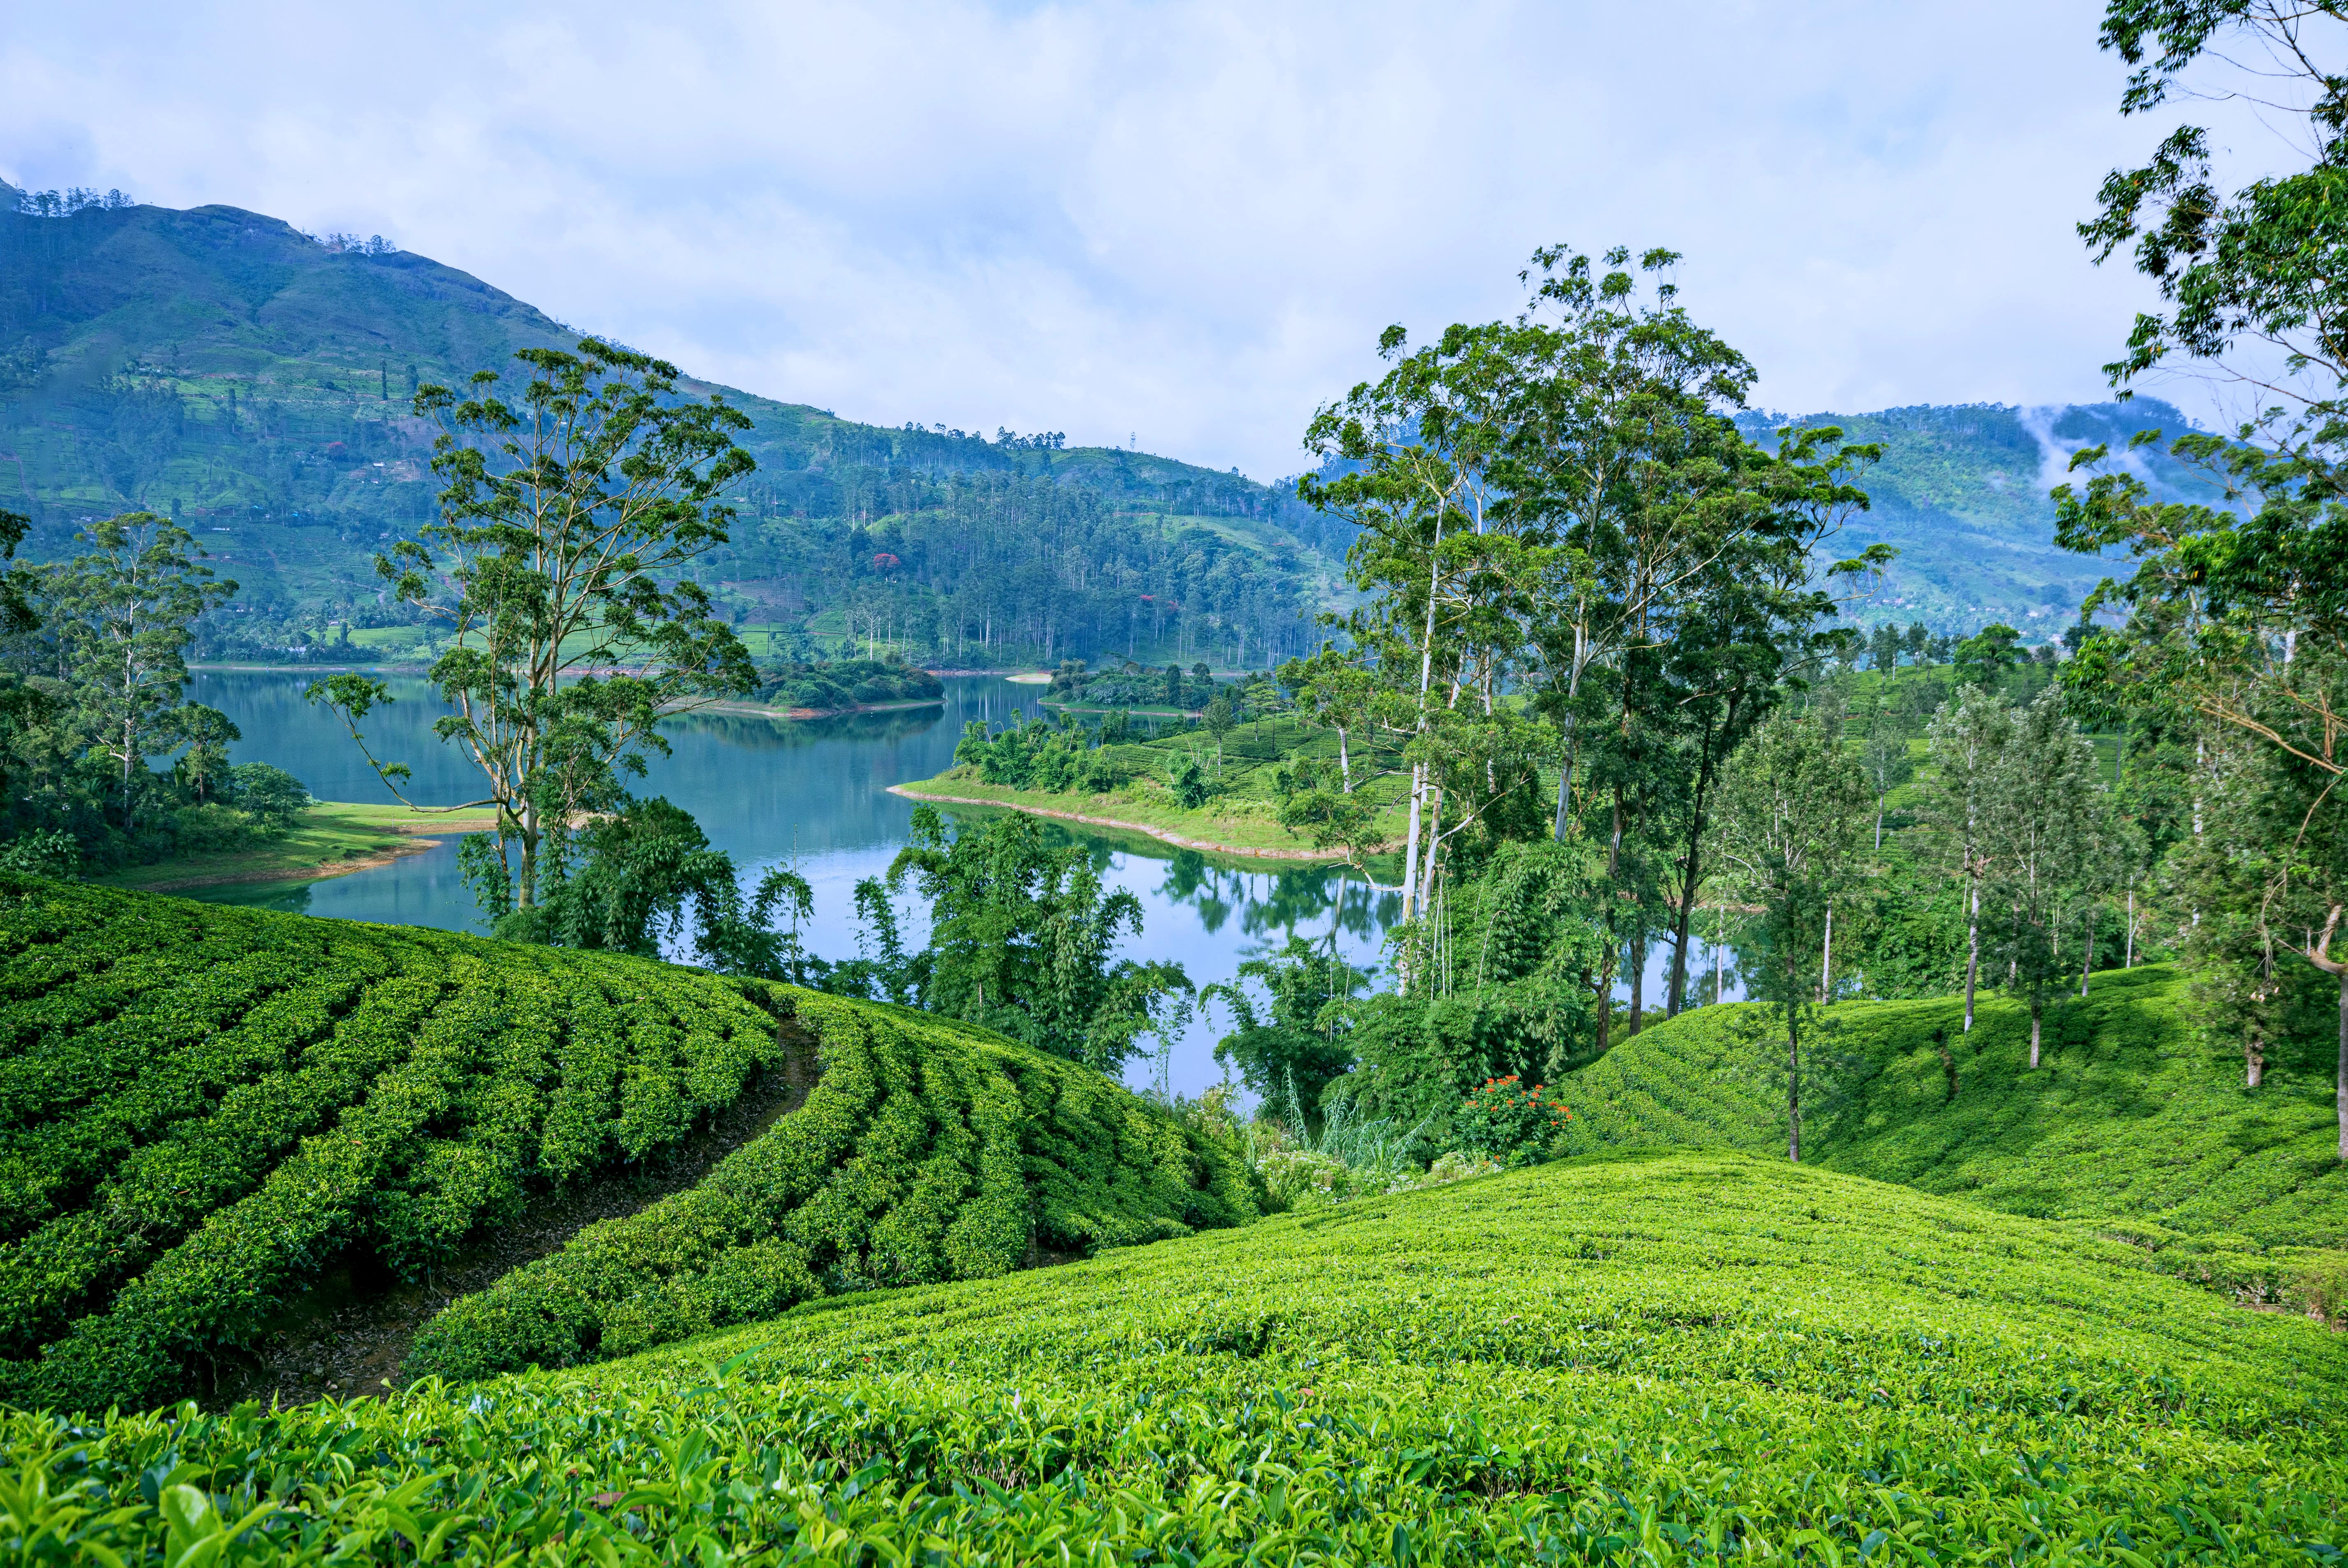 Ceylon tea plantations in Sri Lanka.